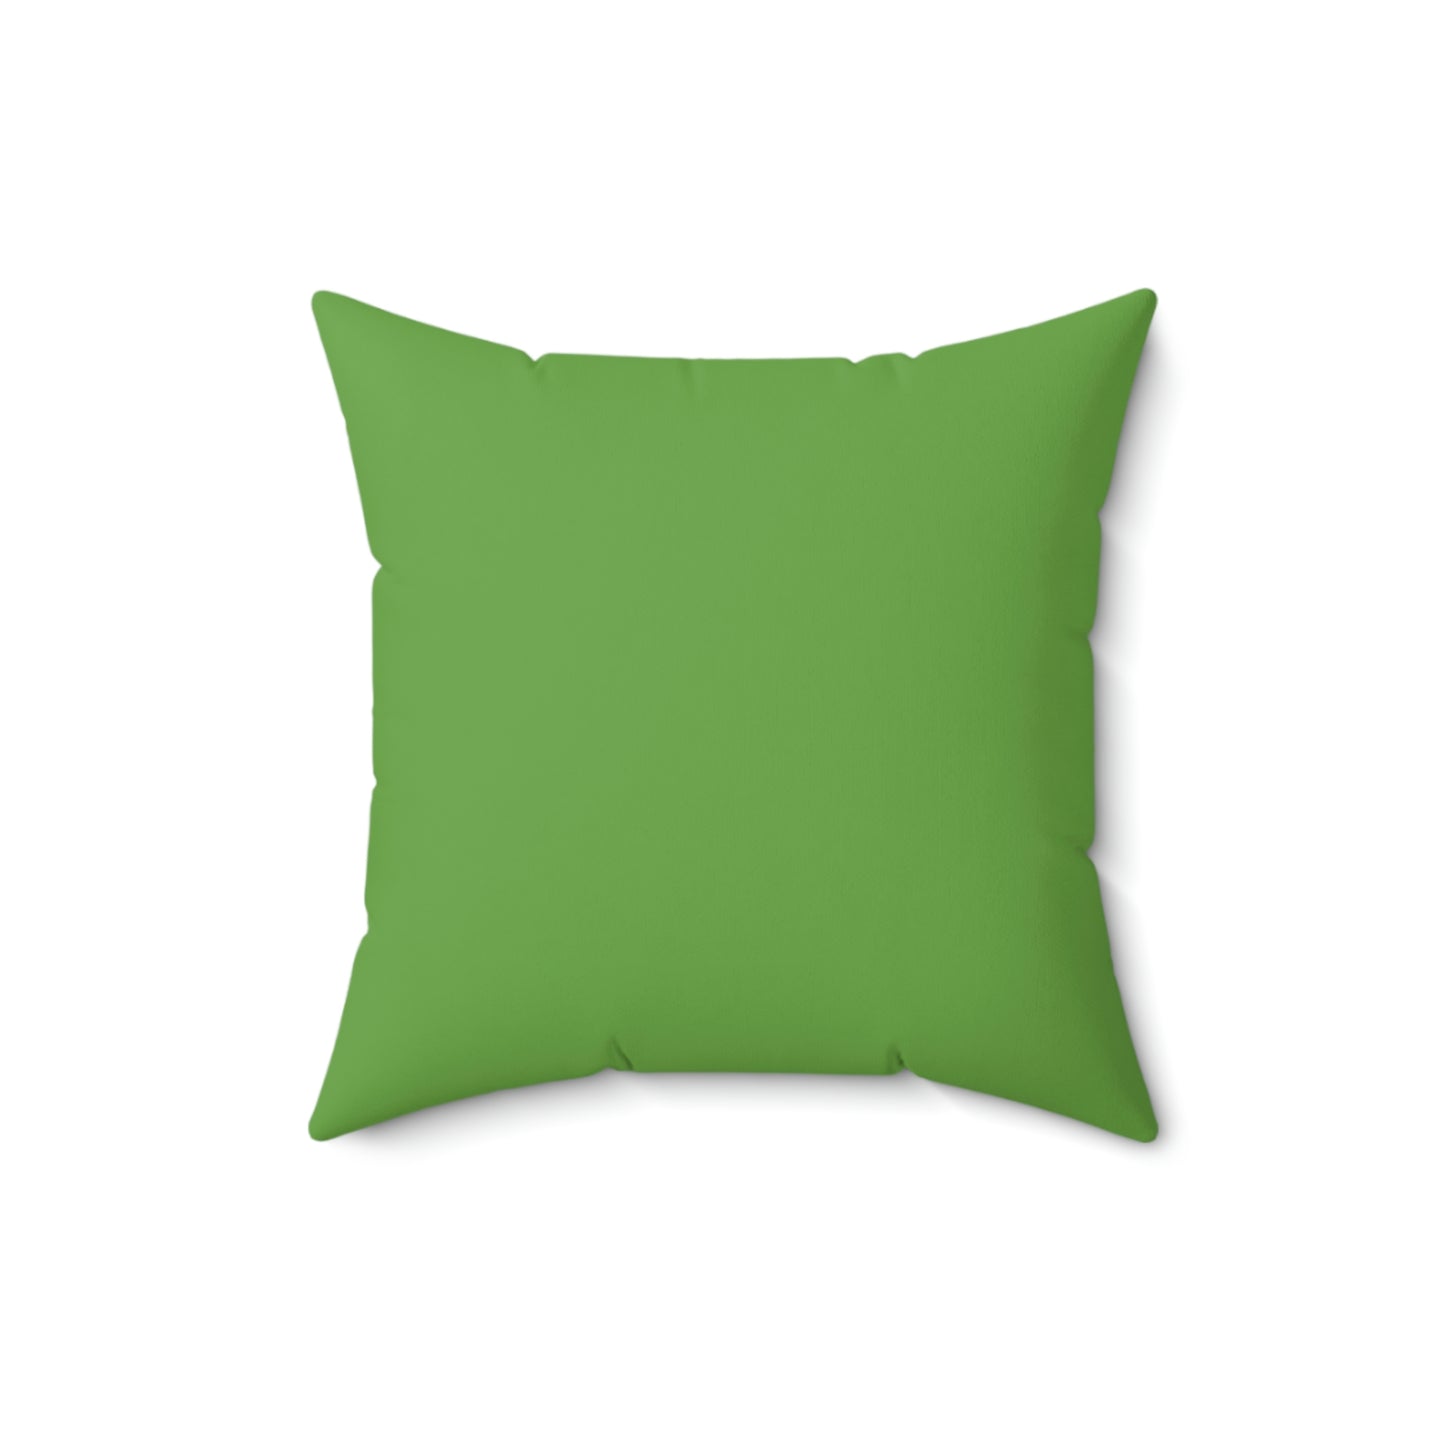 Spun Polyester Square Pillow Case “Kindergarten Rocks on Green”